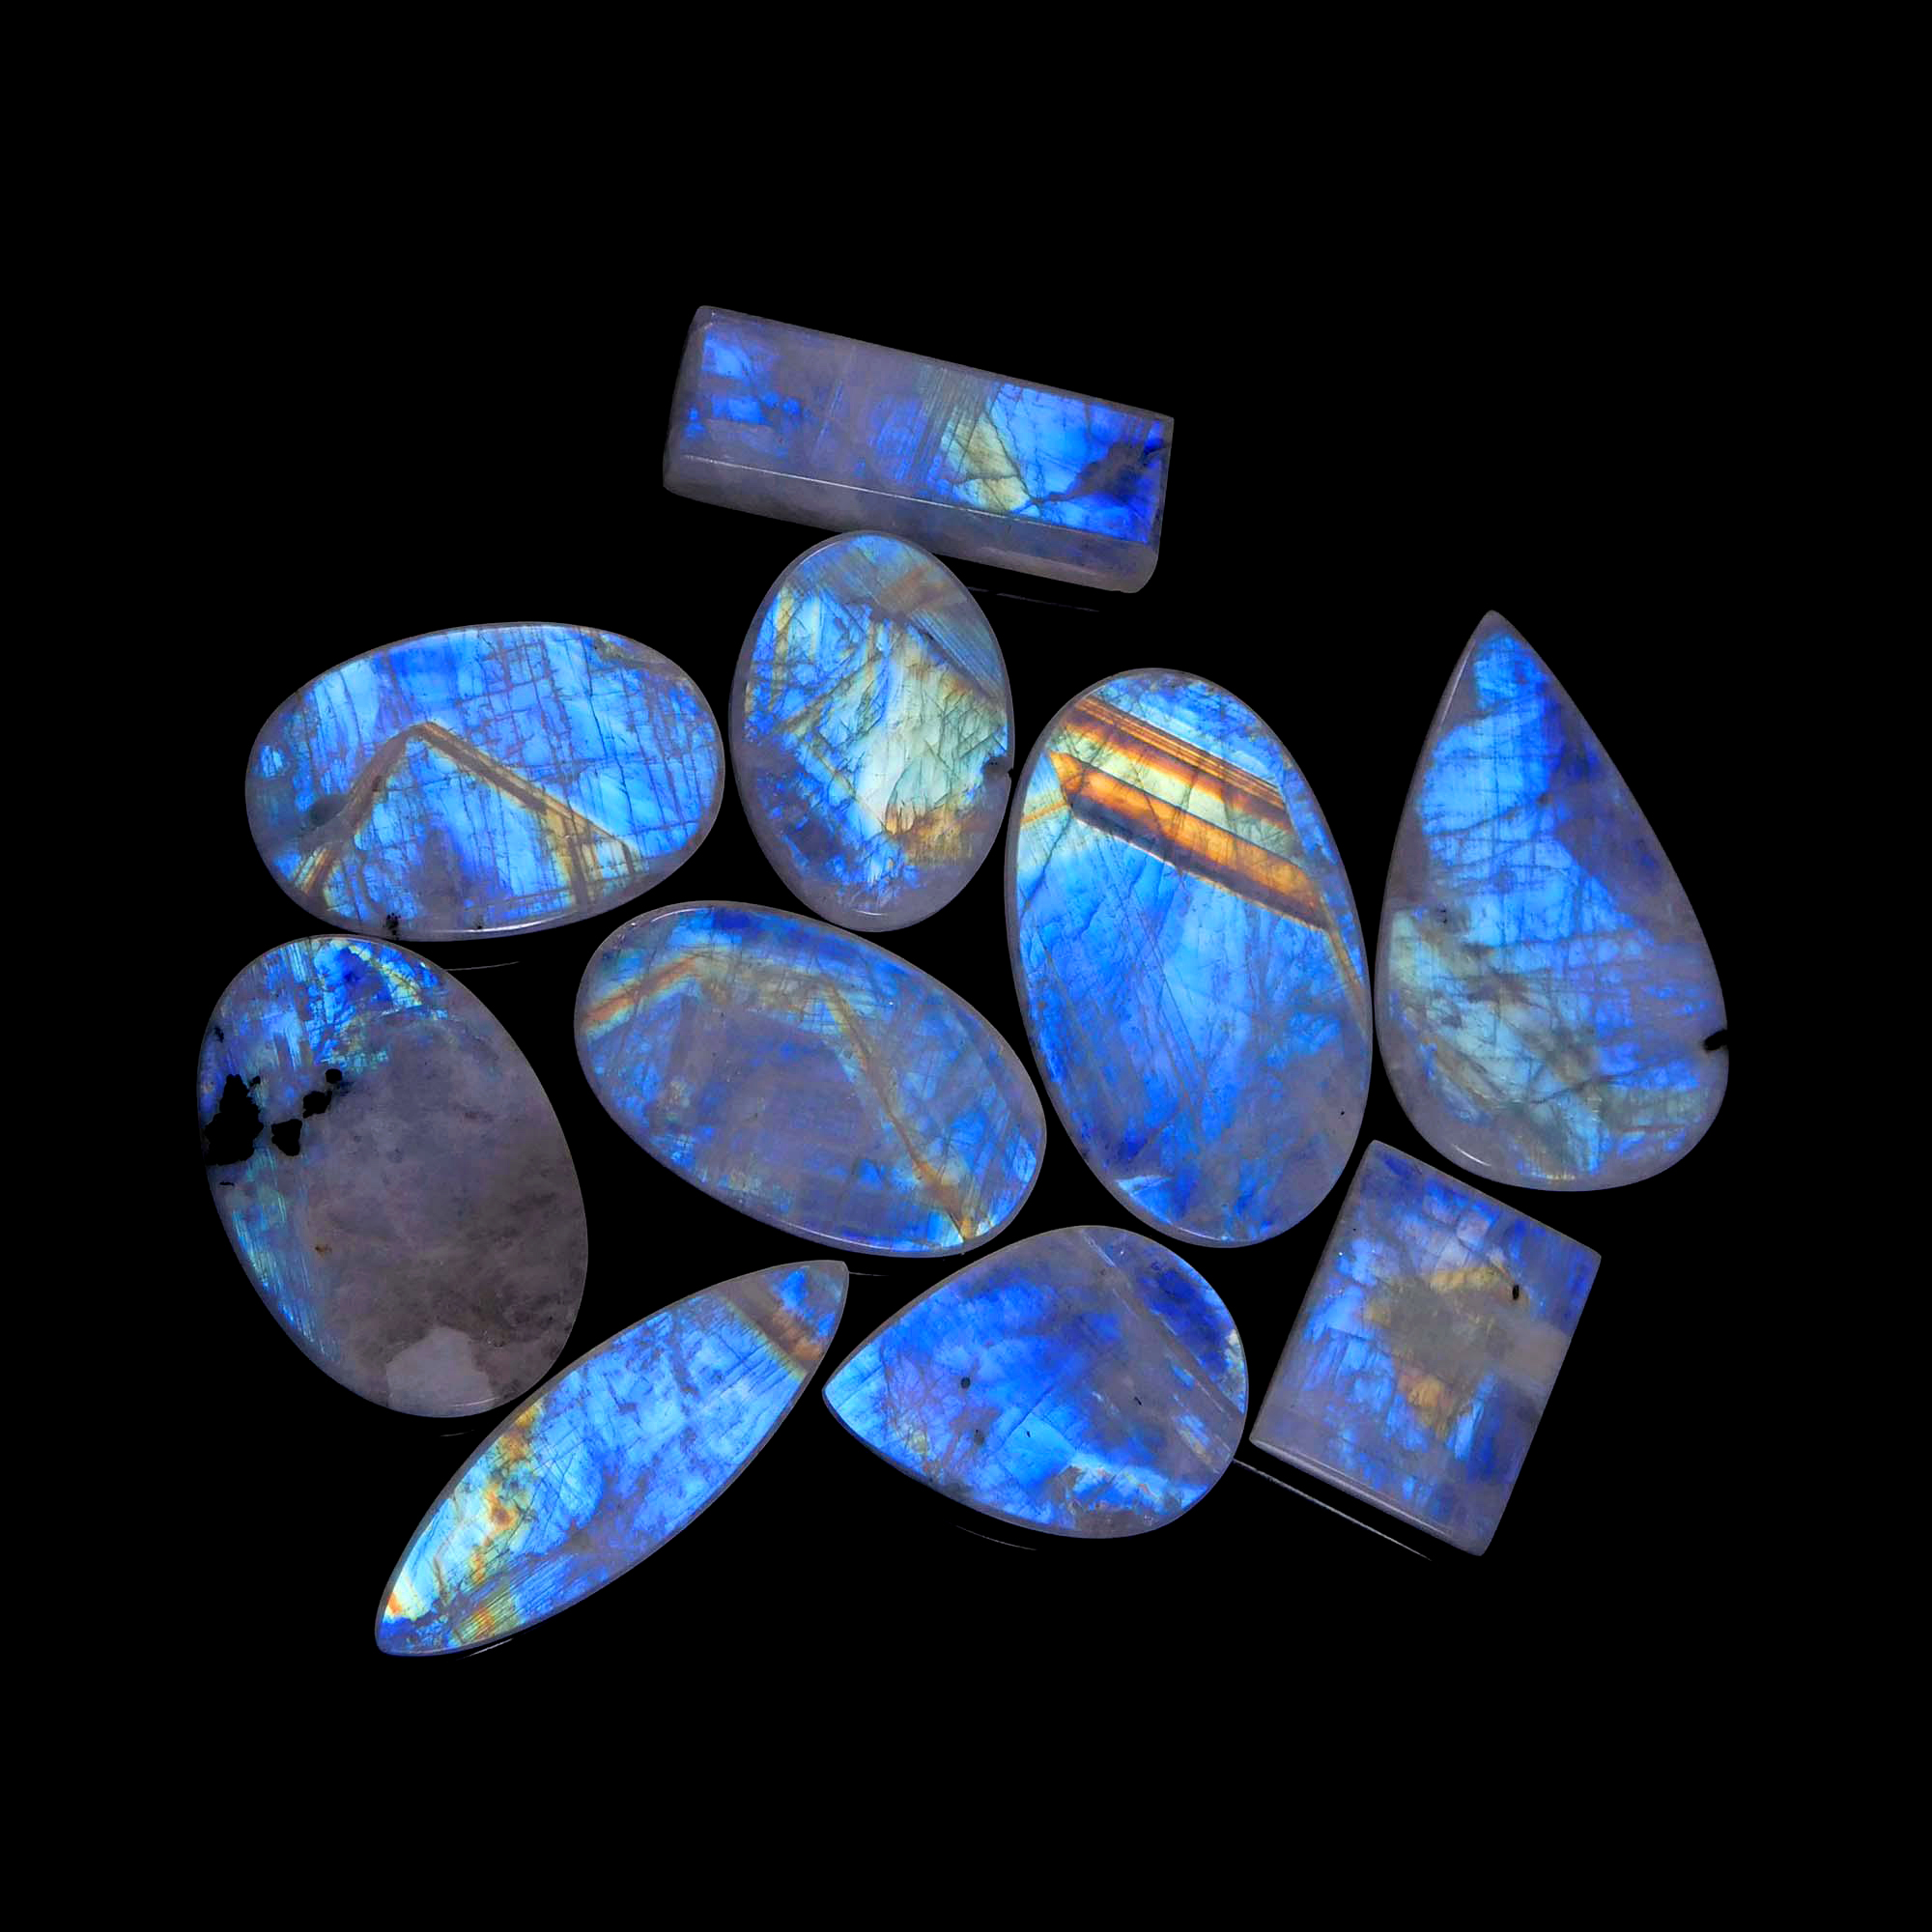 10 Pcs. 426Cts. Natural Blue Fire Rainbow Moonstone Mix Cabochon Wholesale Lot Gemstone 45X27 31X23 mm.